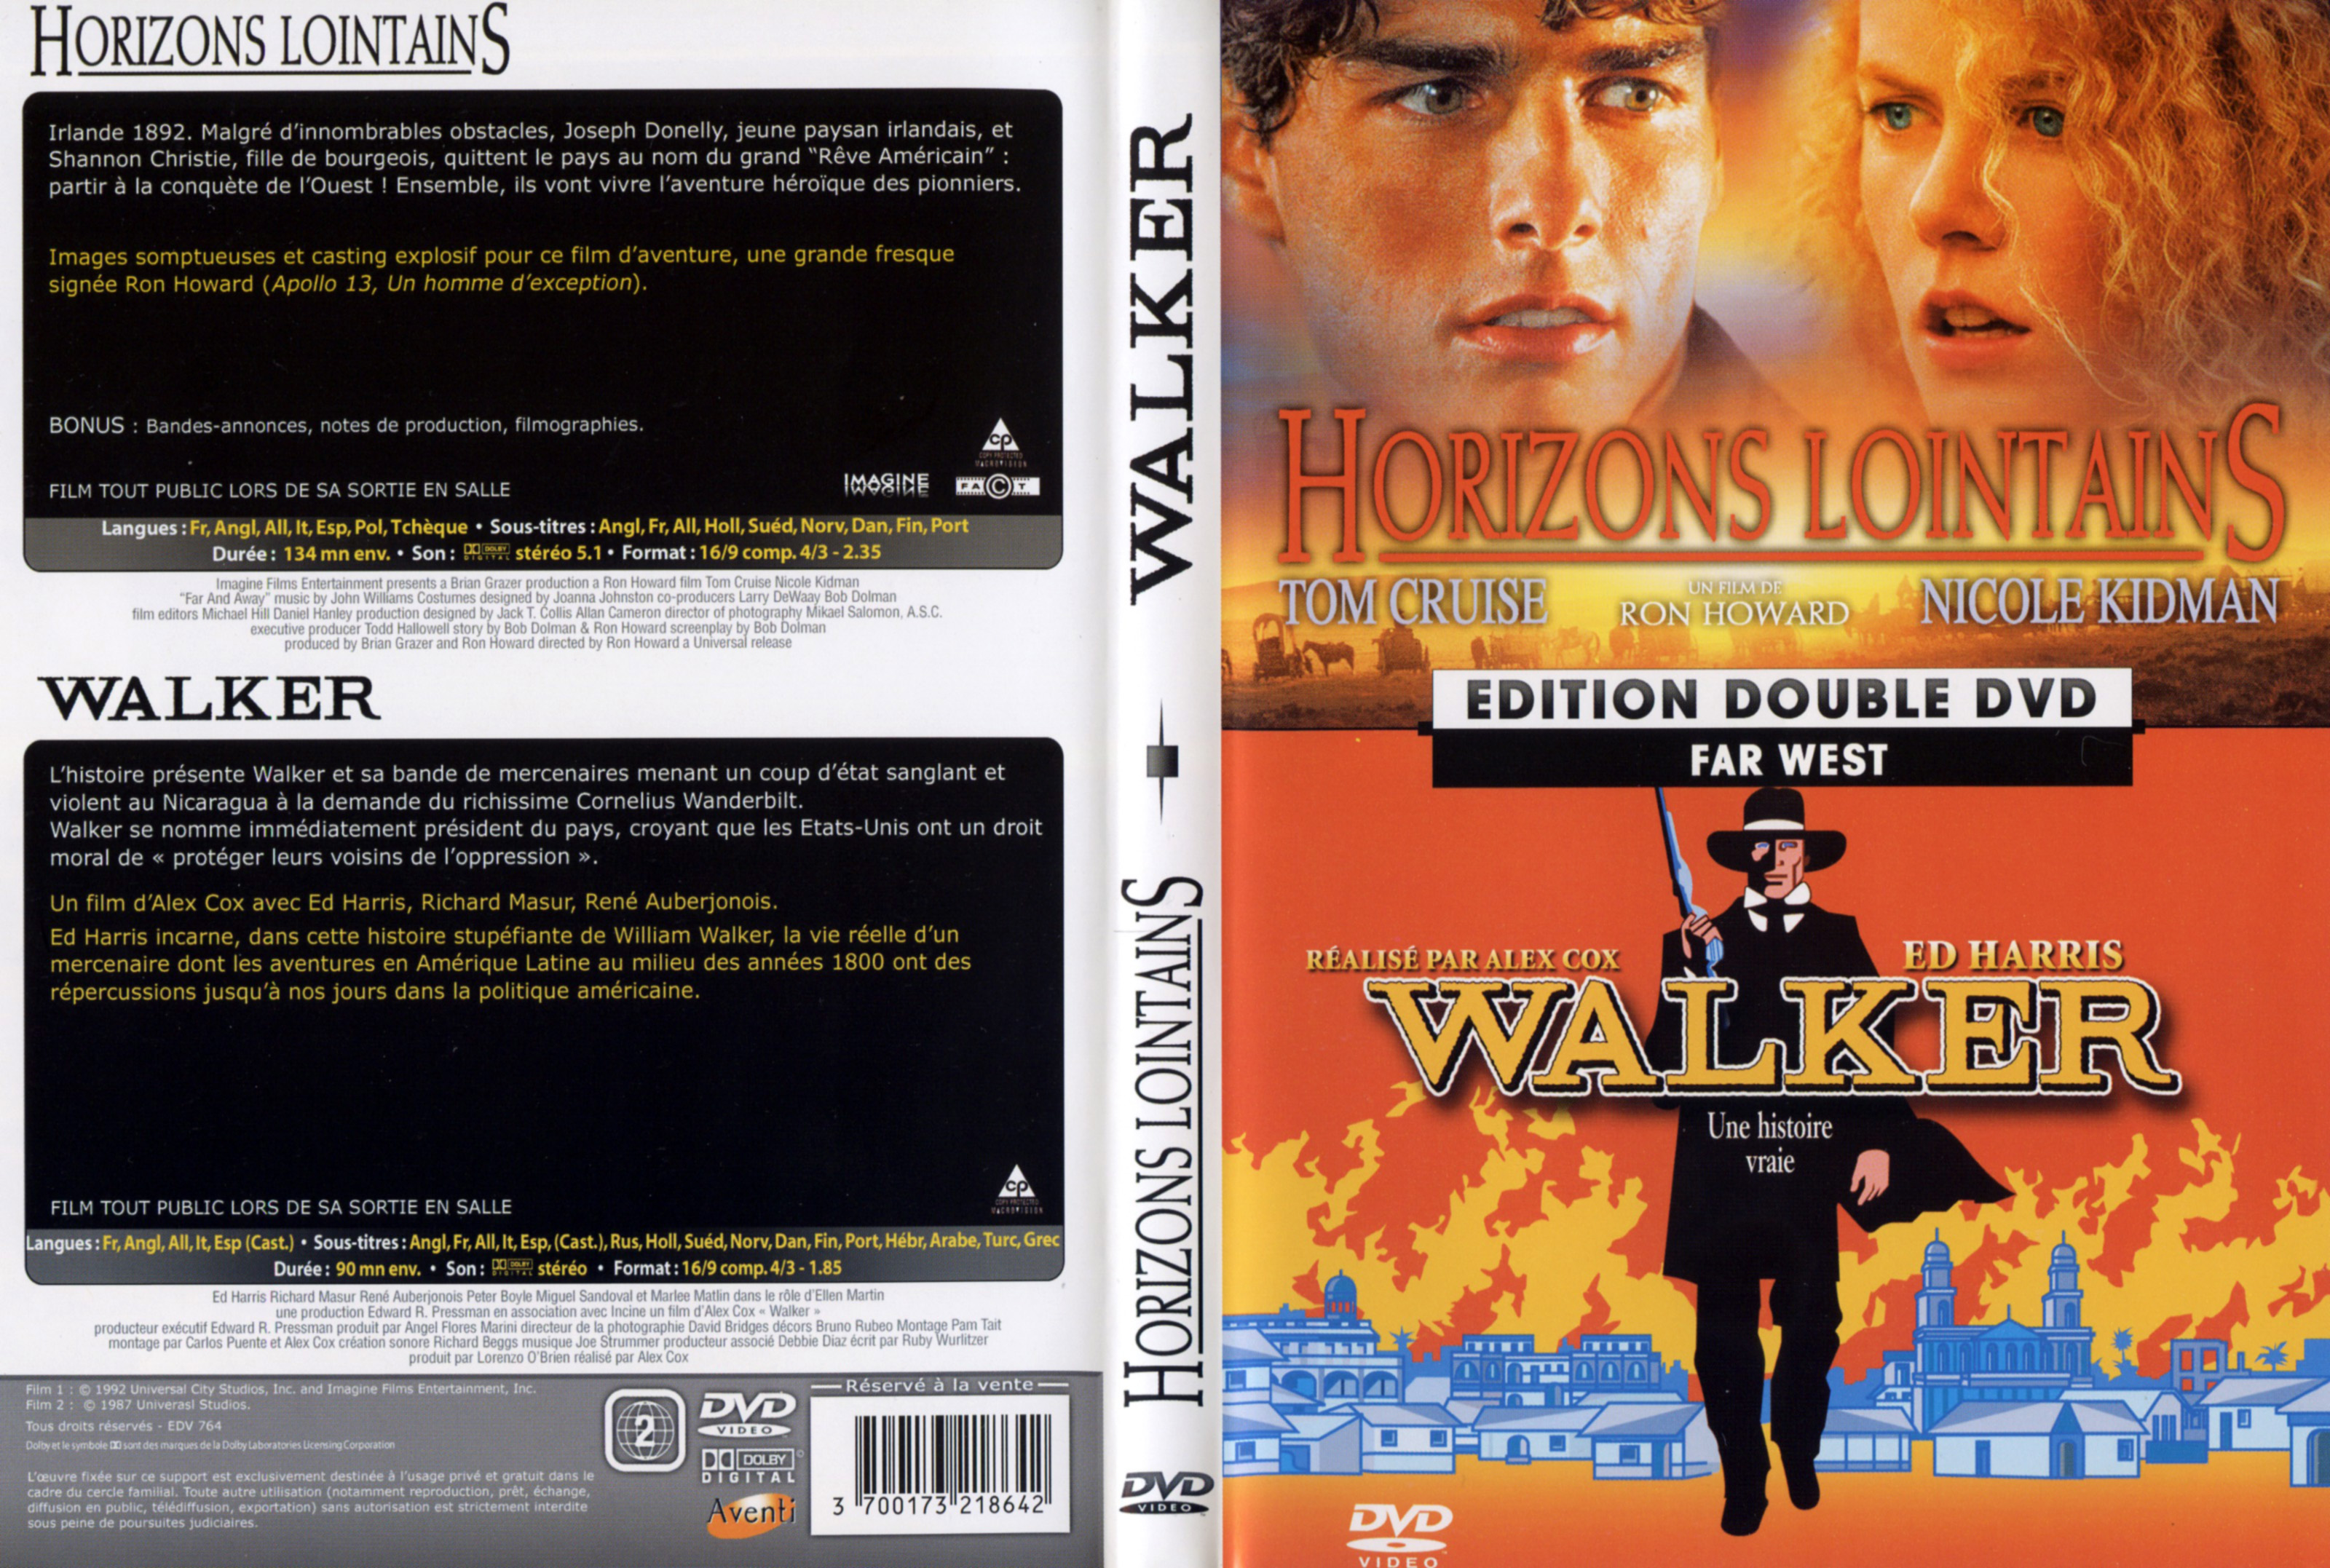 Jaquette DVD Horizons lointains + Walker